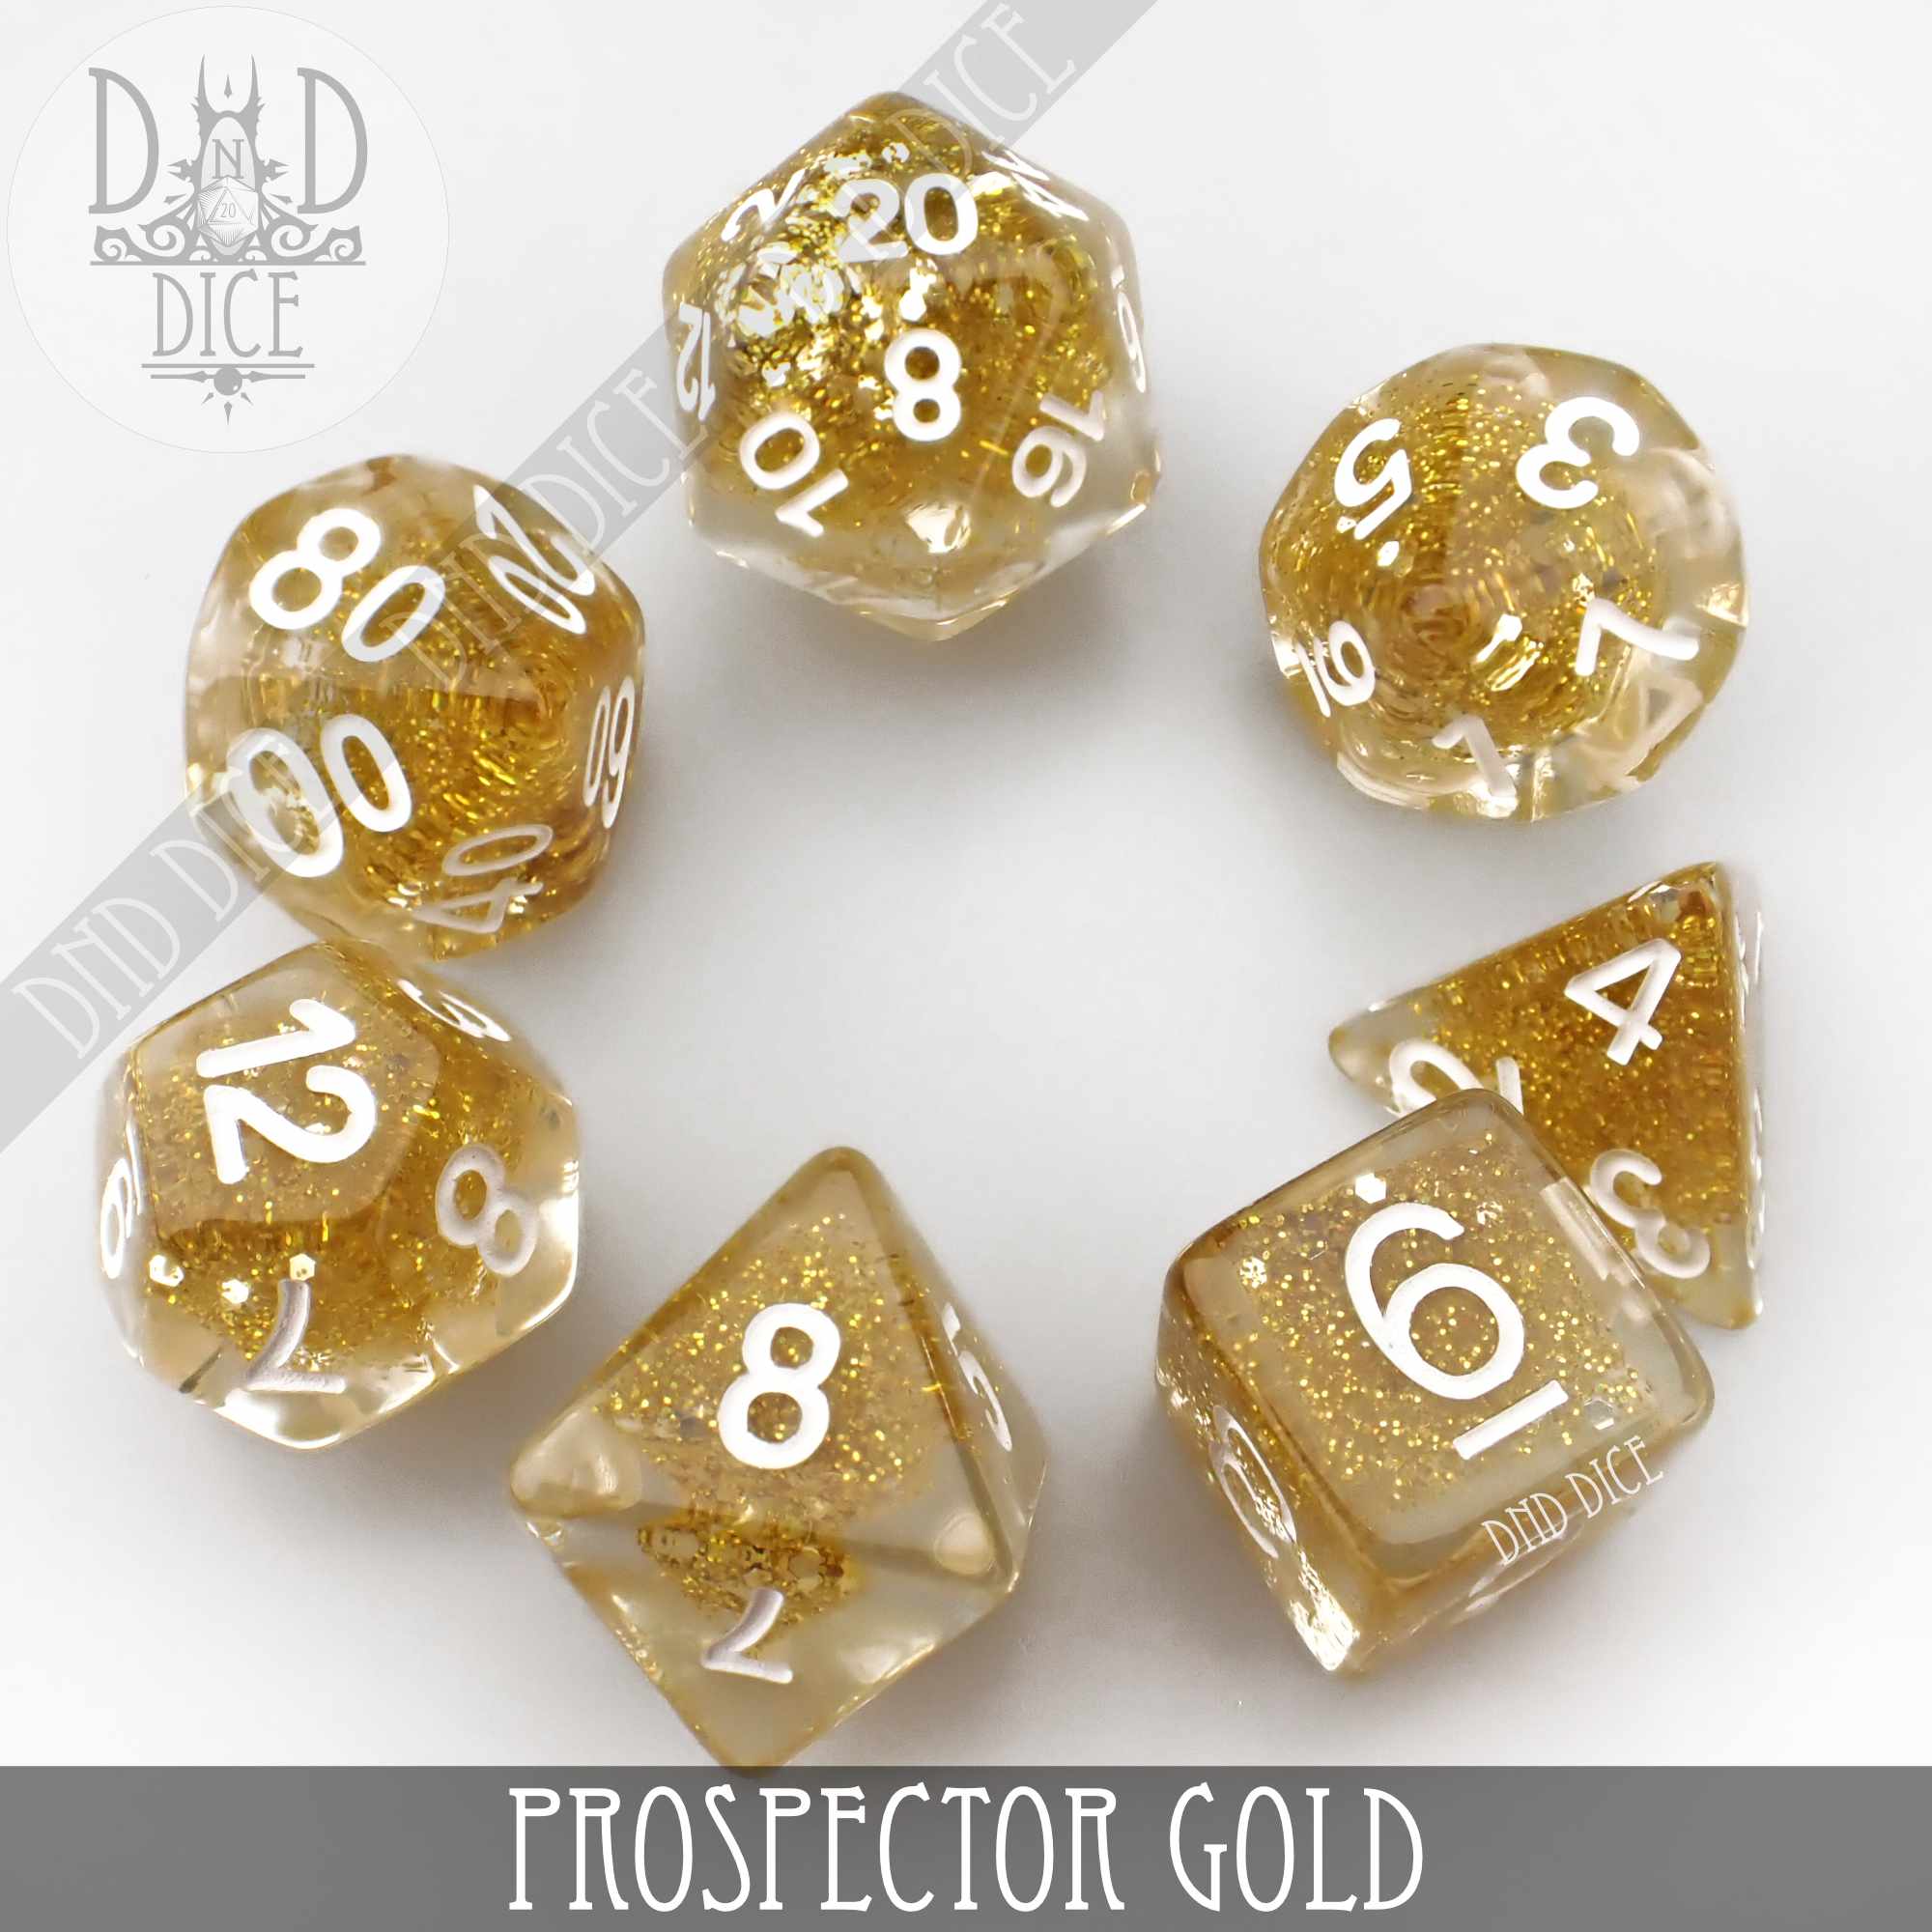 Prospector Gold Dice Set